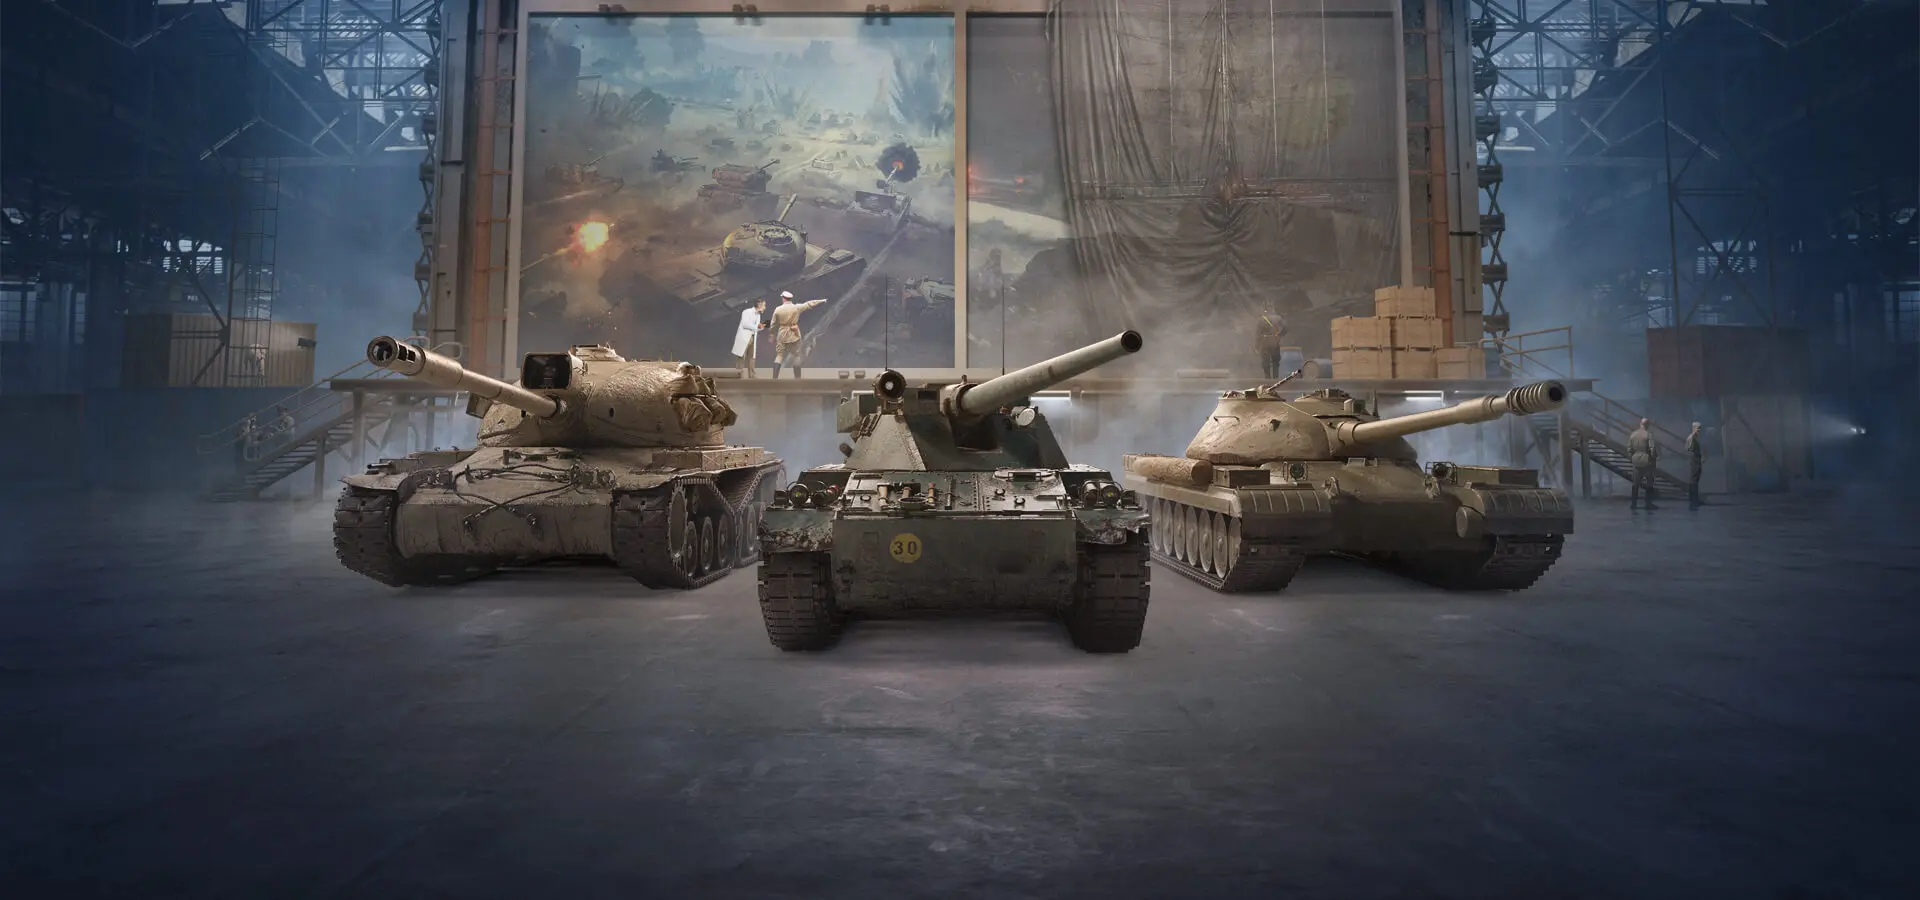 Ответы разработчиков World of Tanks 07.03.2020. Линия фронта 2020